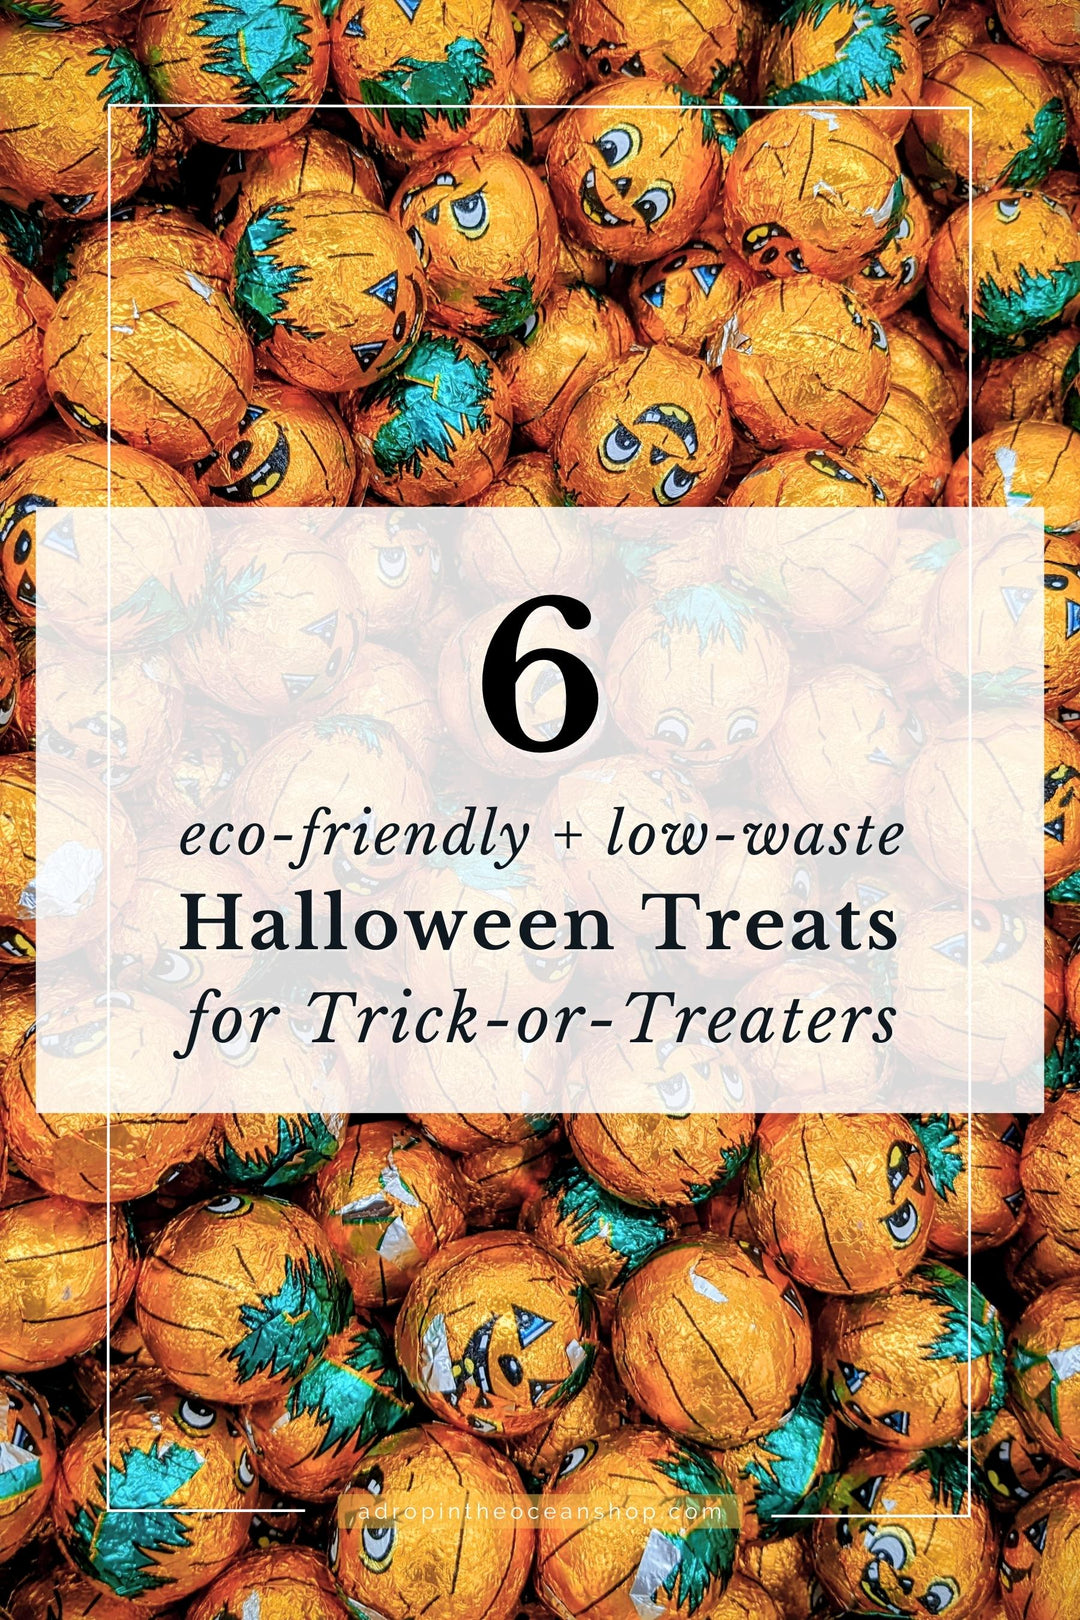 A Drop in the Ocean Zero Waste Store: 6 Sustainable and Zero Waste Halloween Treats